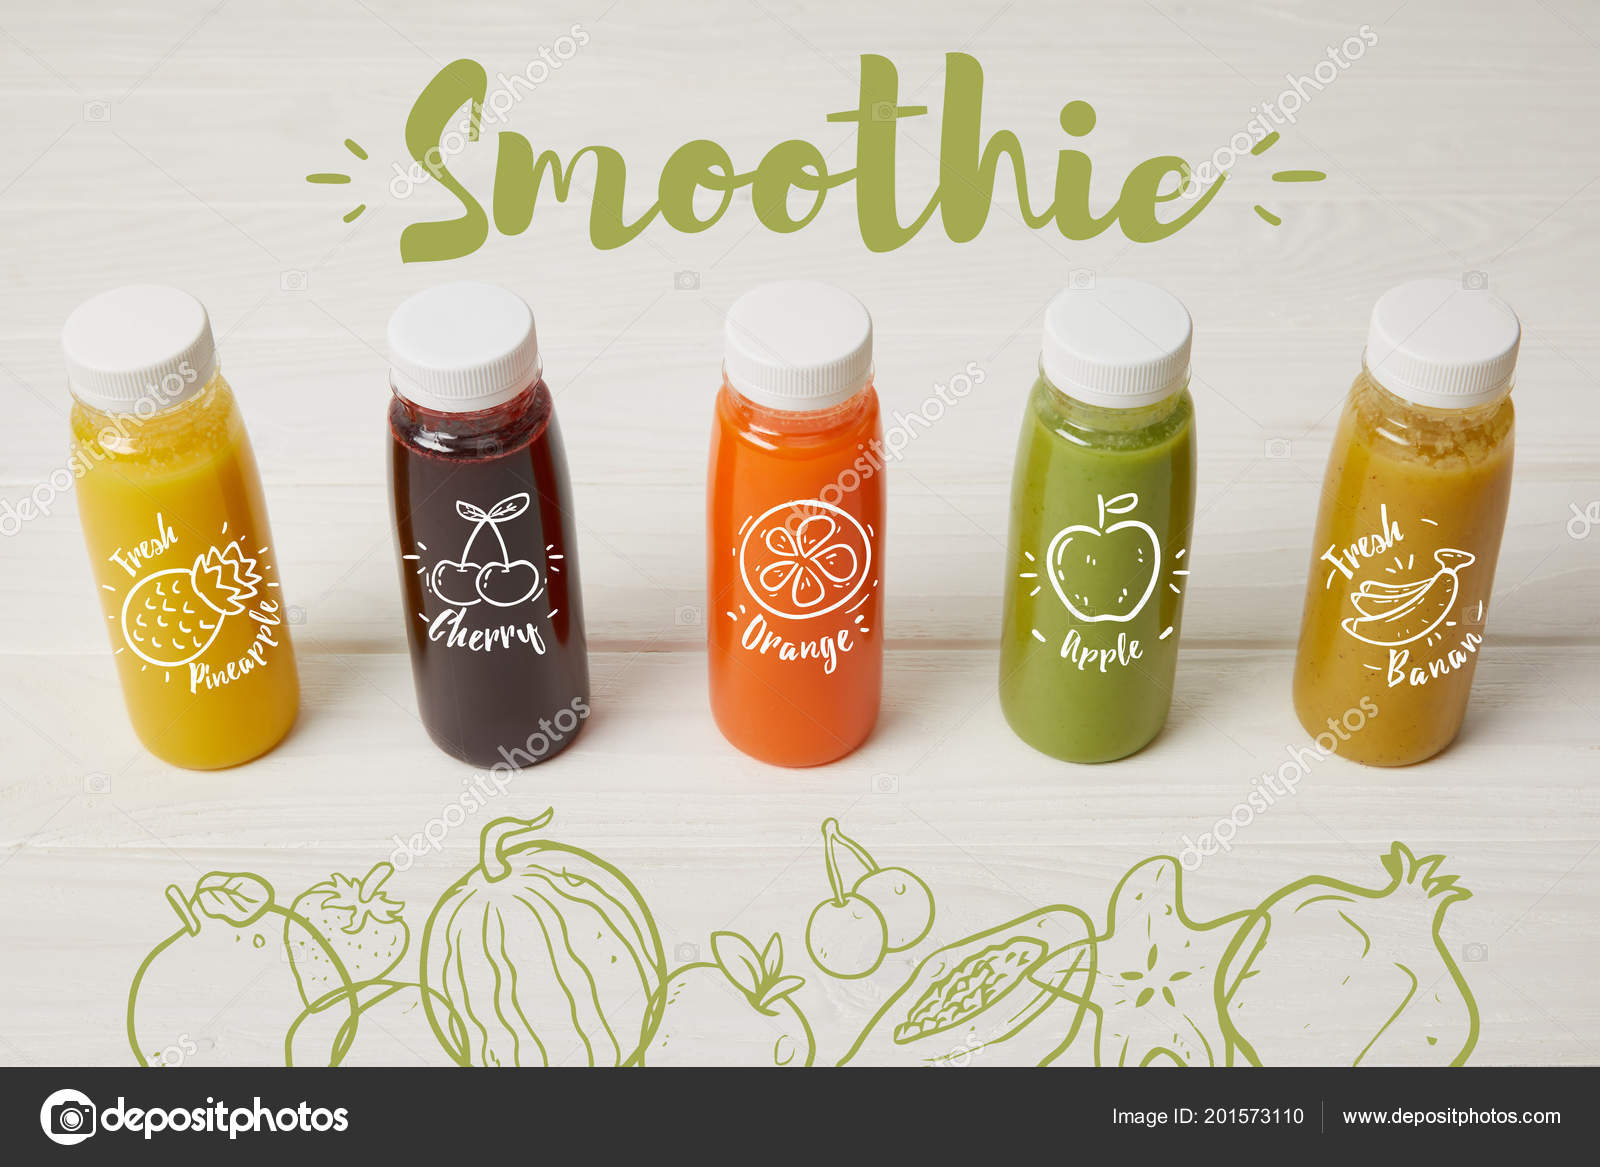 https://st4.depositphotos.com/13349494/20157/i/1600/depositphotos_201573110-stock-photo-fresh-organic-smoothies-bottles-standing.jpg